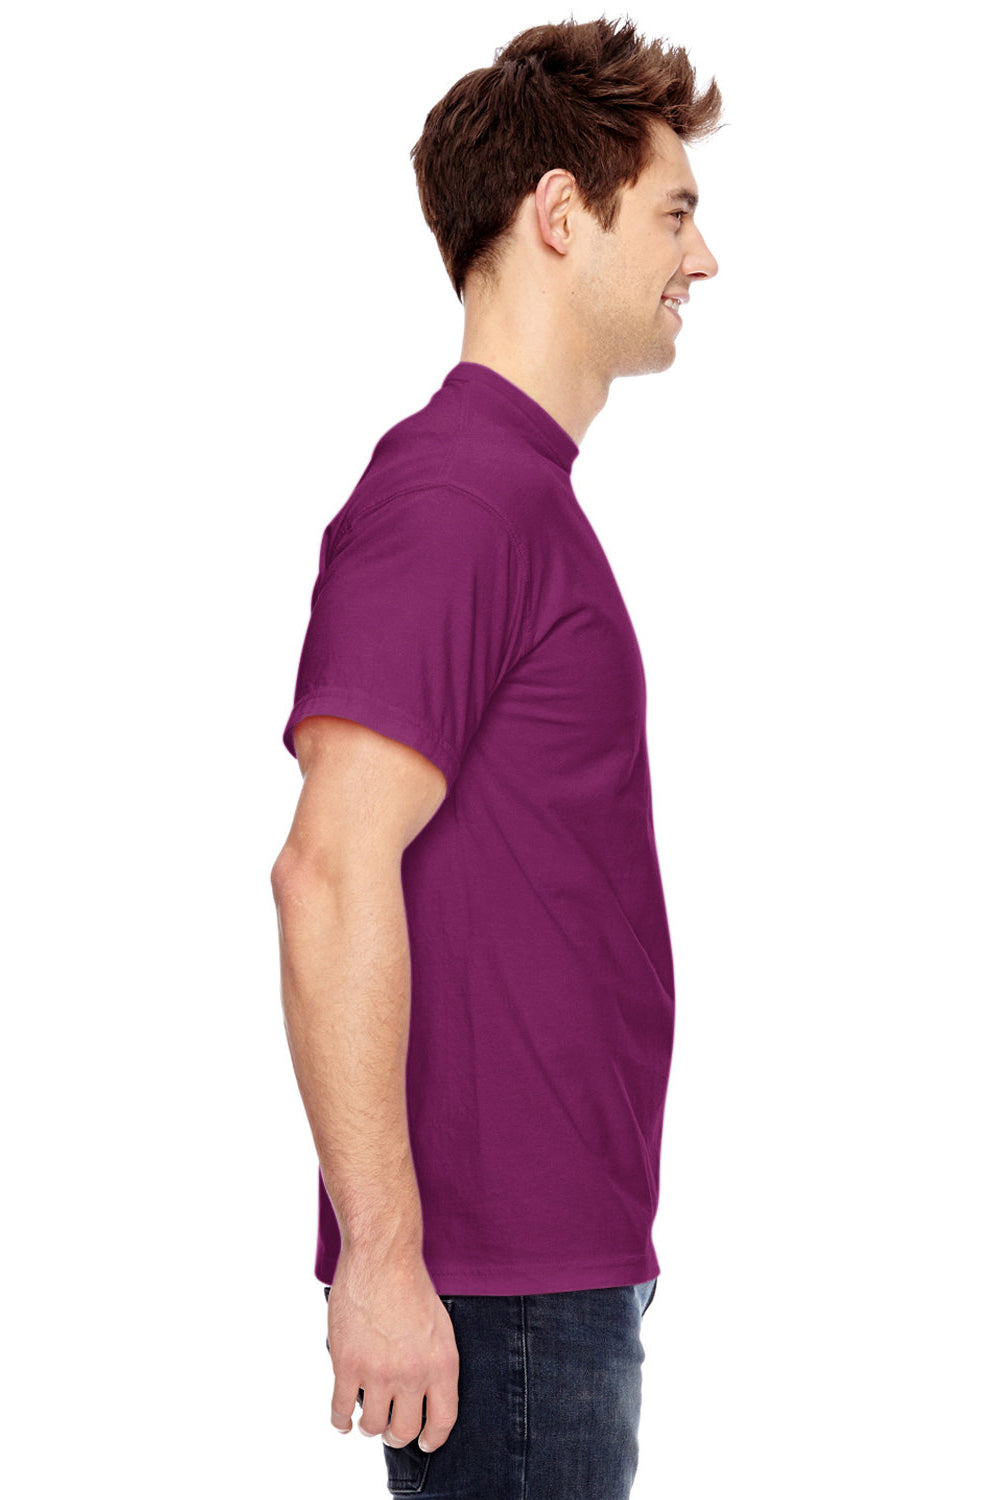 Comfort Colors 1717/C1717 Mens Short Sleeve Crewneck T-Shirt Boysenberry SIde